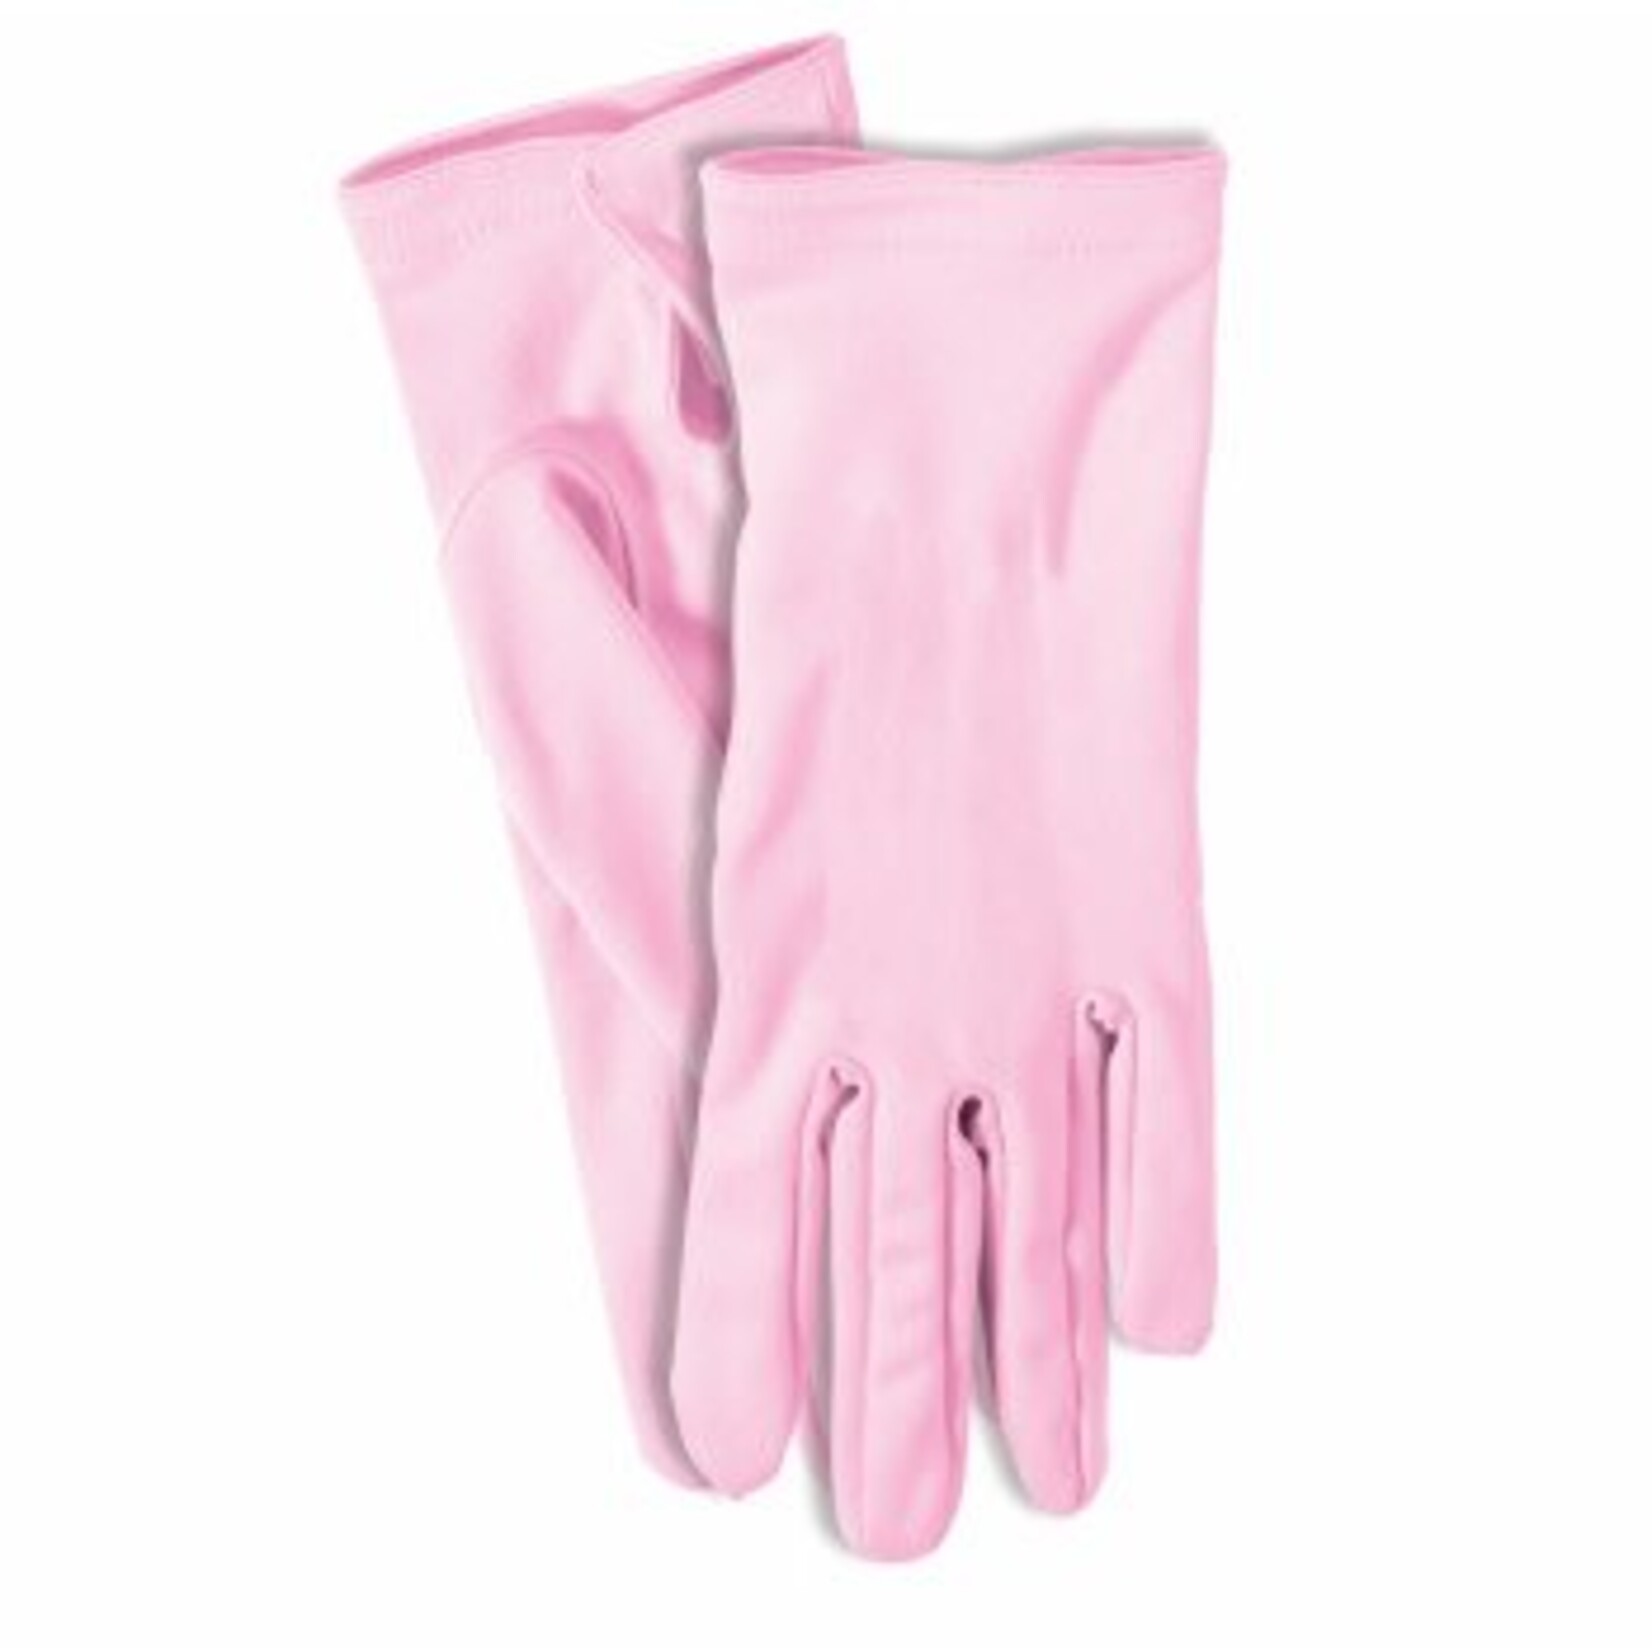 Short Colored Gloves